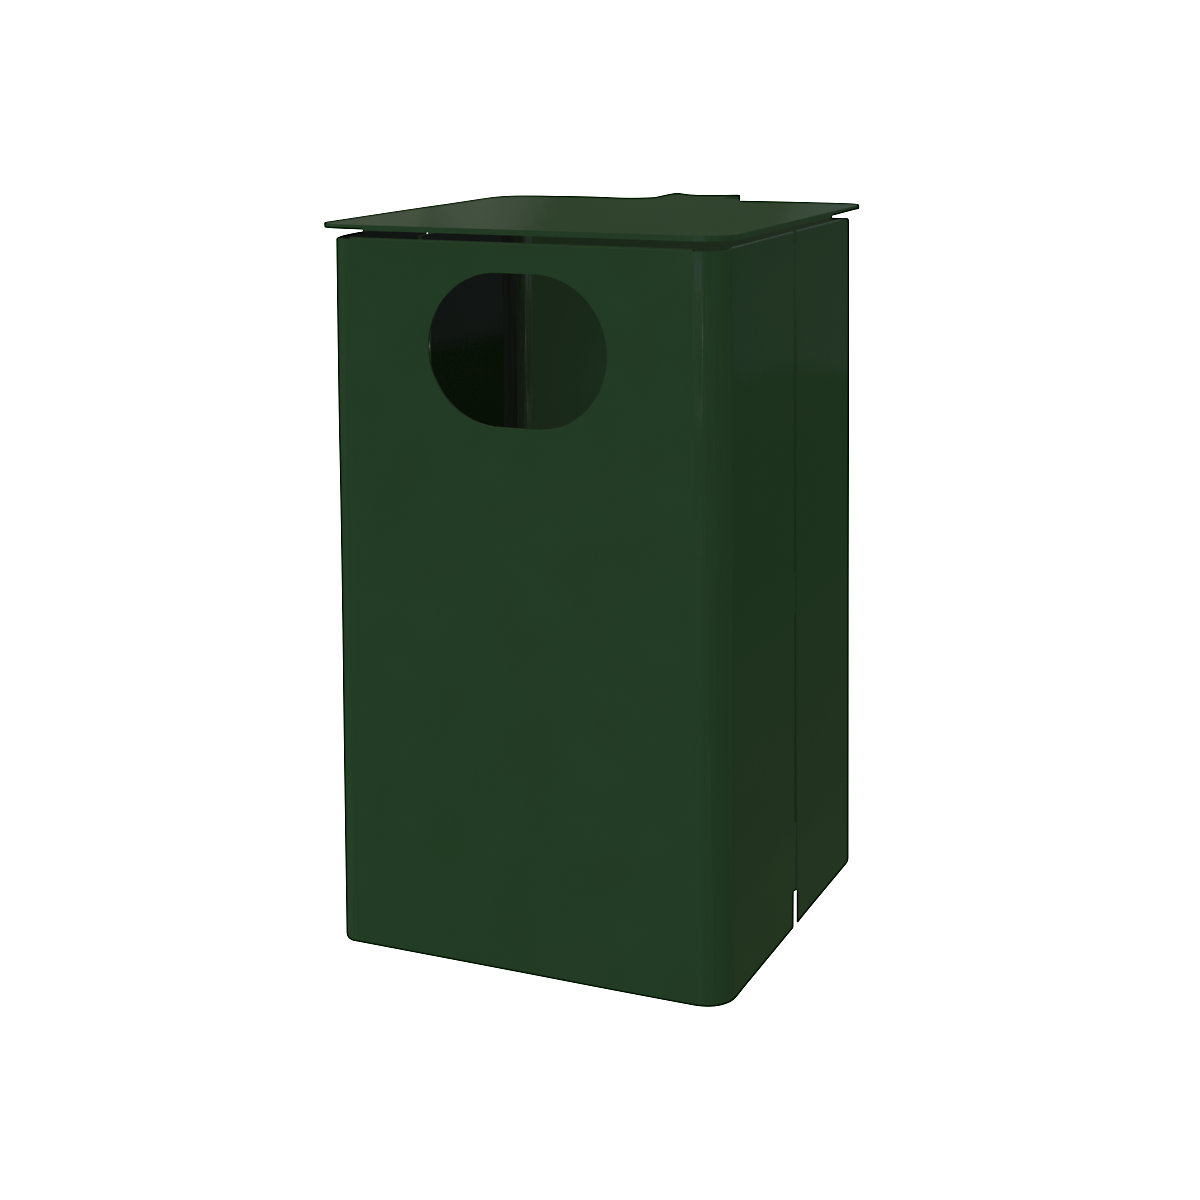 Recipiente do lixo para exterior, capacidade 35 l, AxLxP 537 x 325 x 388 mm, verde musgo, a partir de 3 unid.